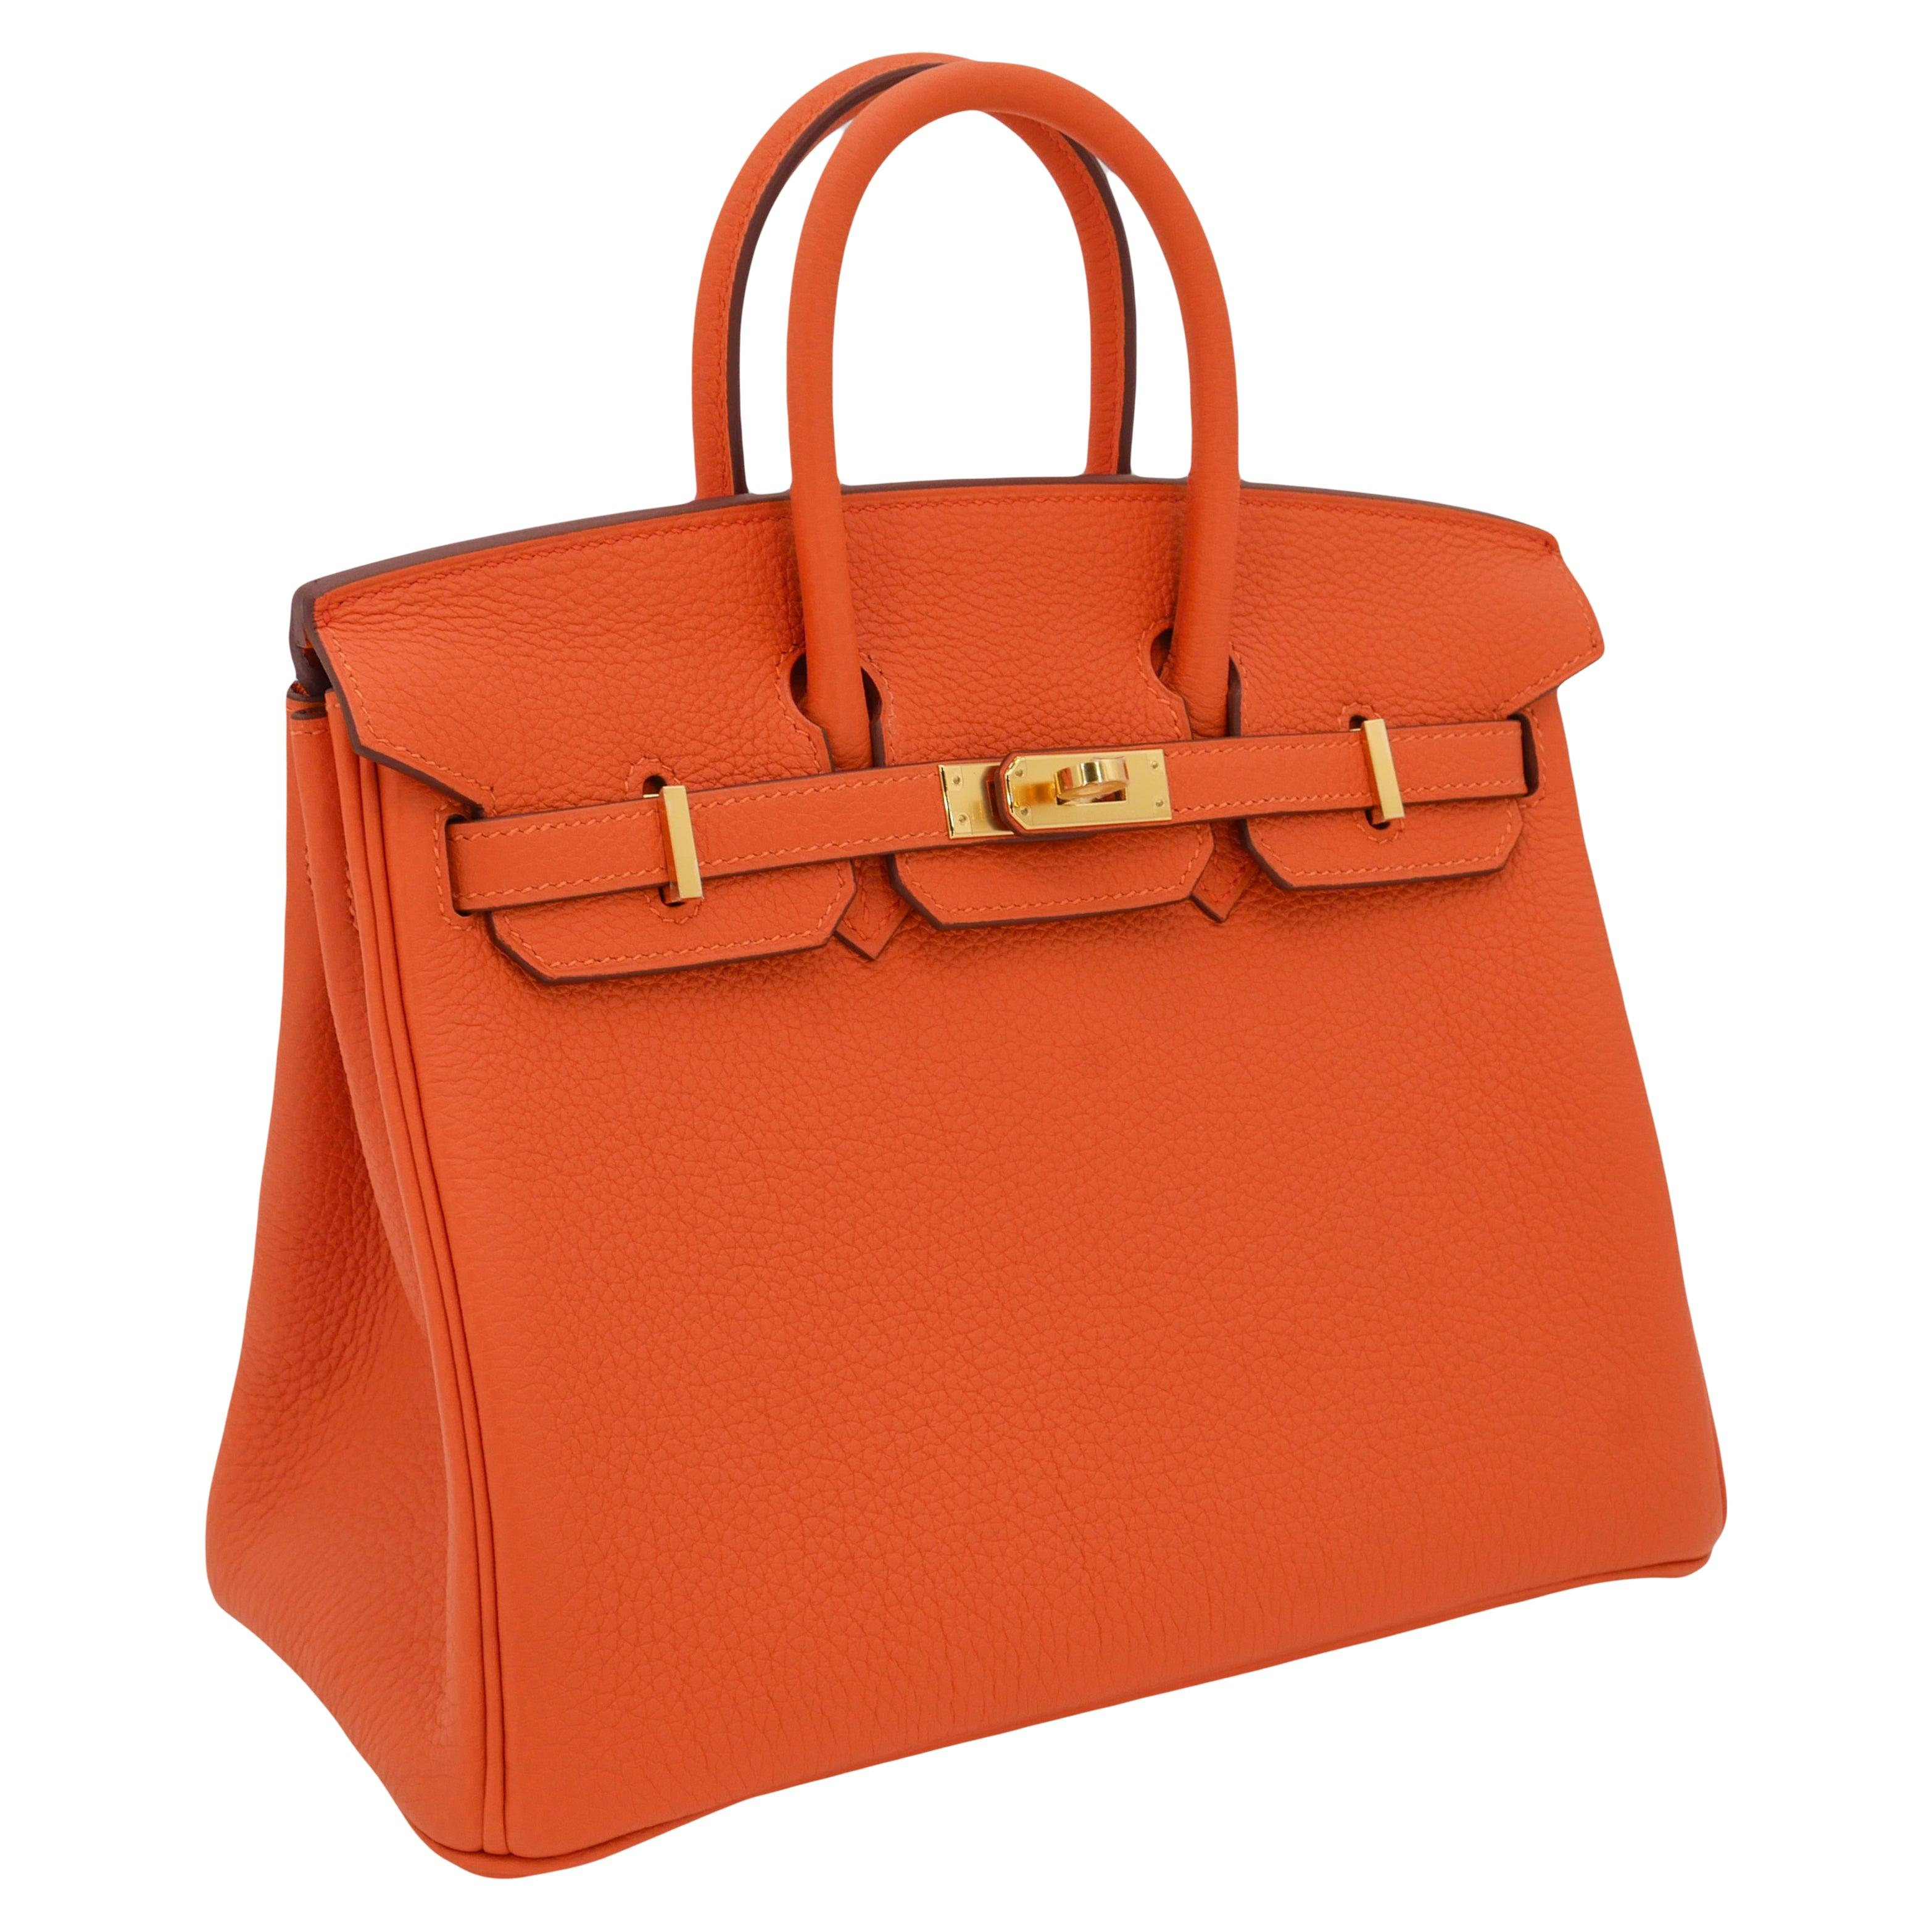 Brand: Hermès
Style: Birkin
Size: 25cm
Color: Orange
Material: Togo Leather
Hardware: Gold (GHW)
Dimensions: 10